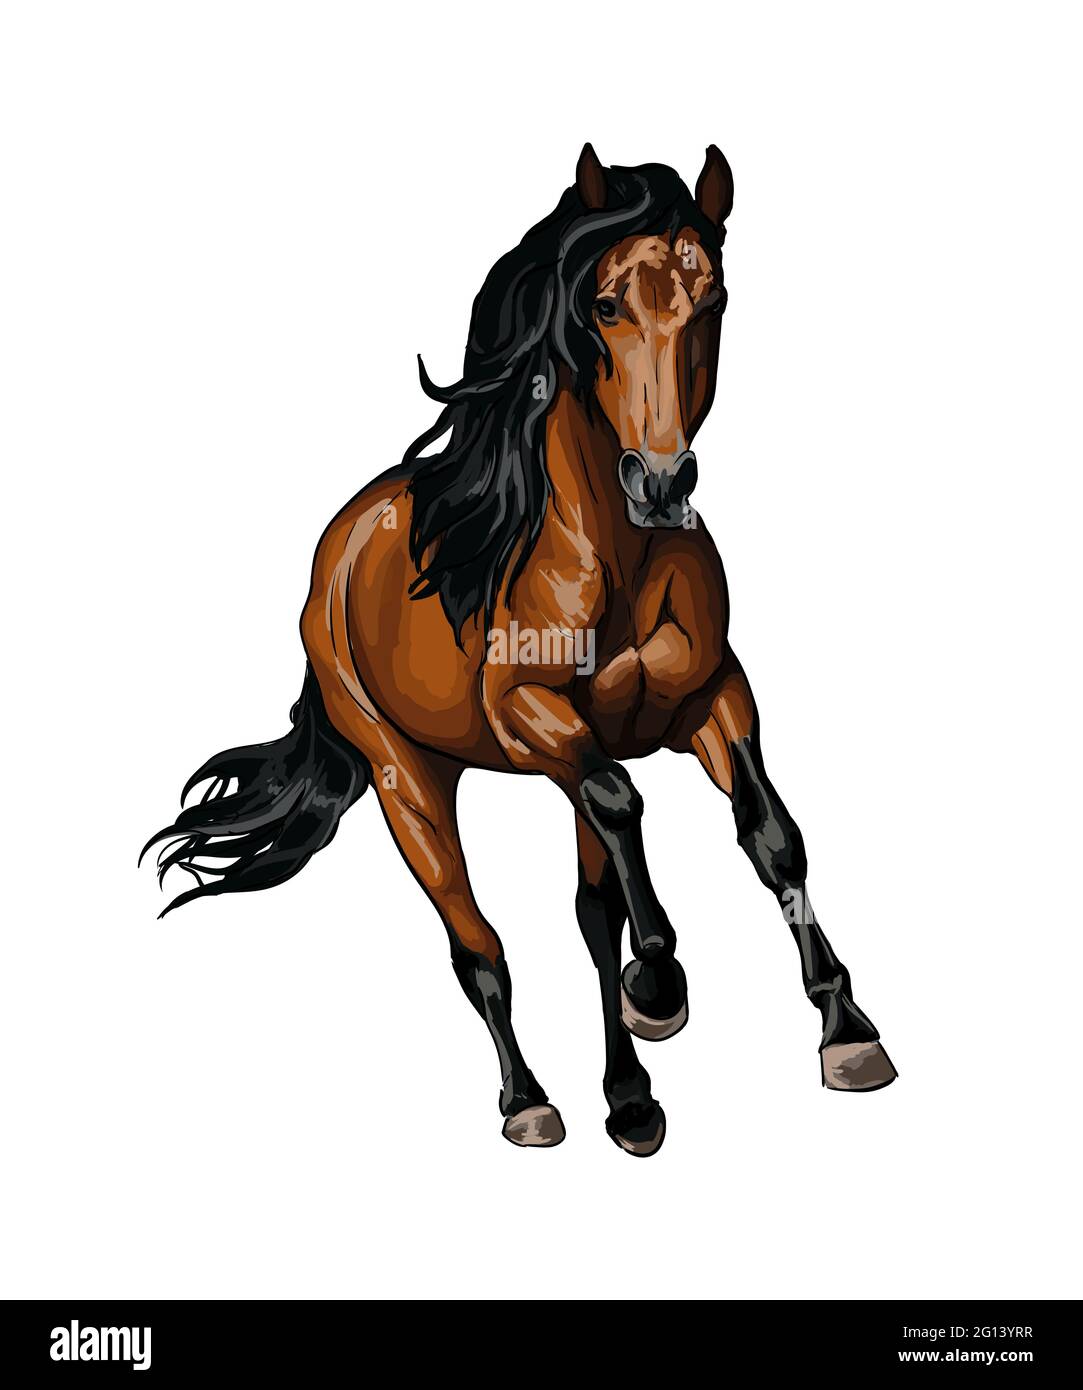 Dibujo realista de un caballo fotografías e imágenes de alta resolución -  Alamy